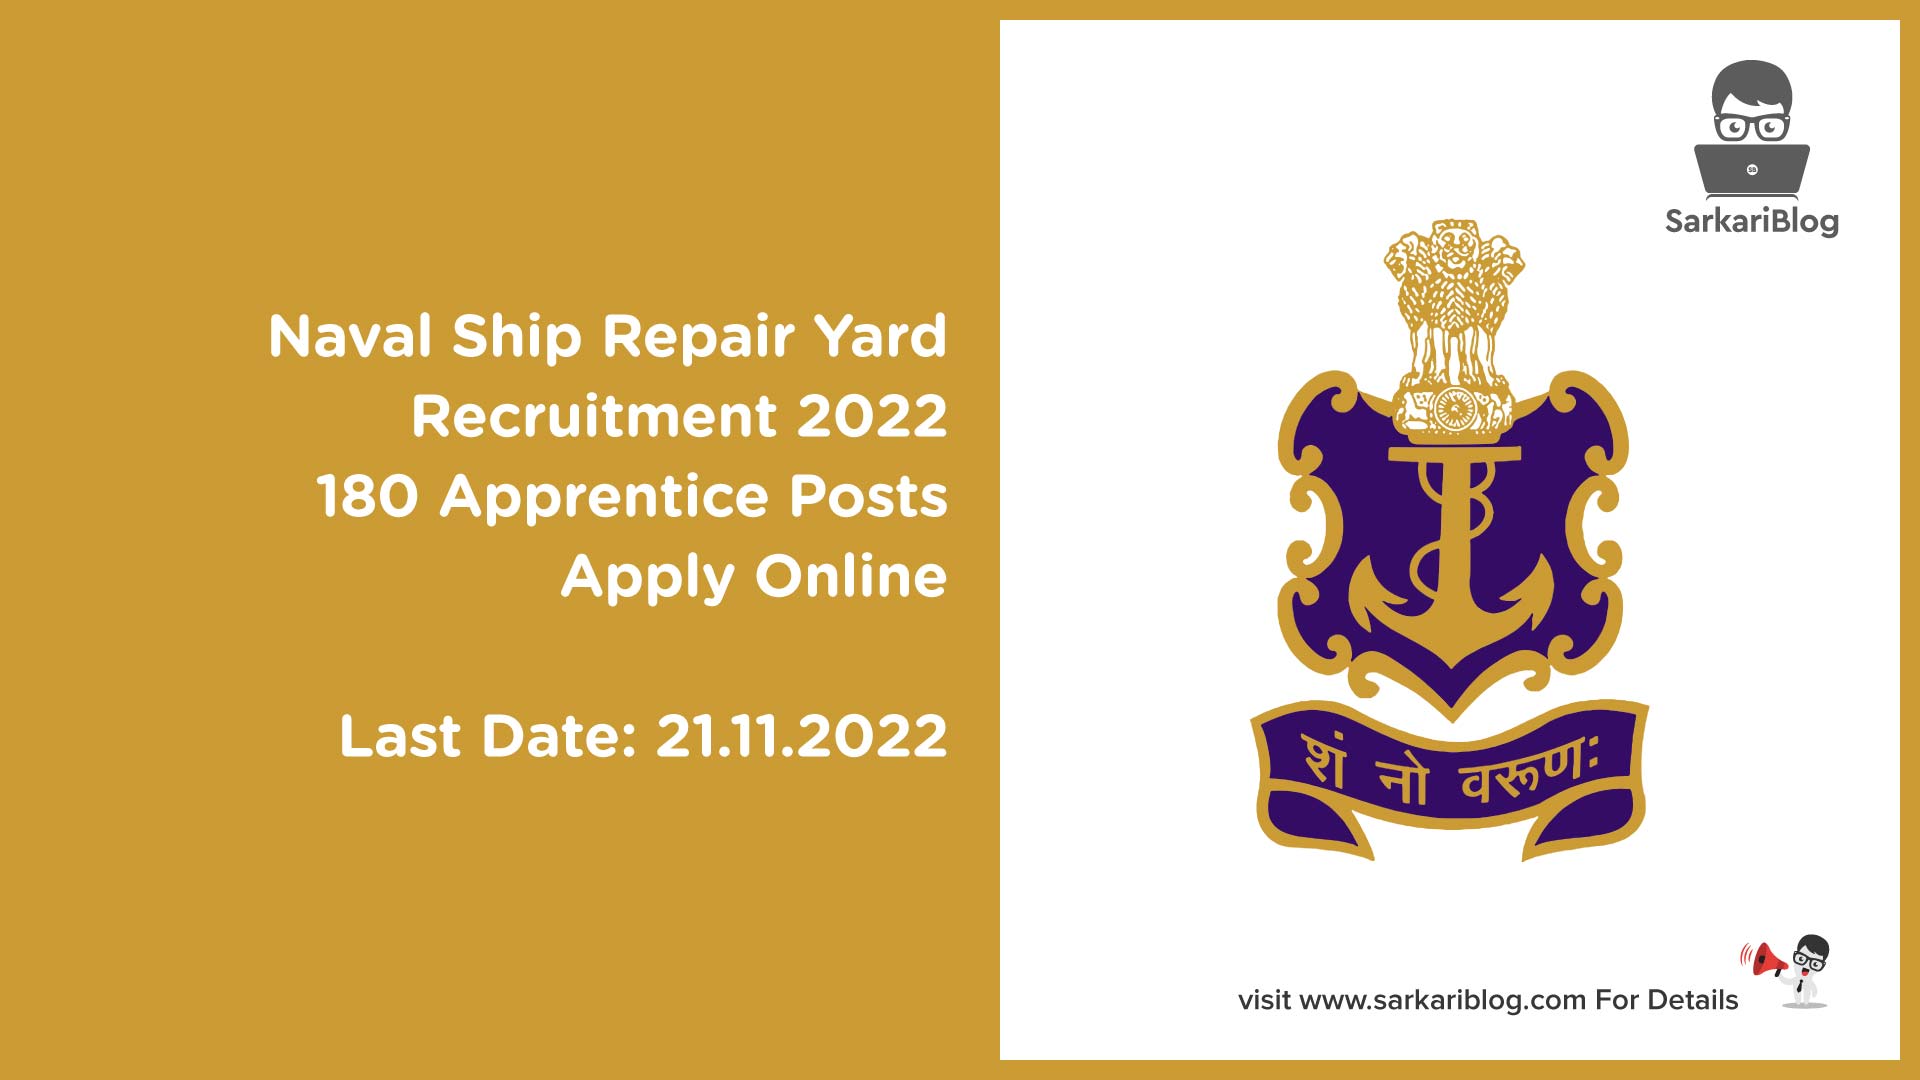 Naval Ship Repair Yard Recruitment 2022